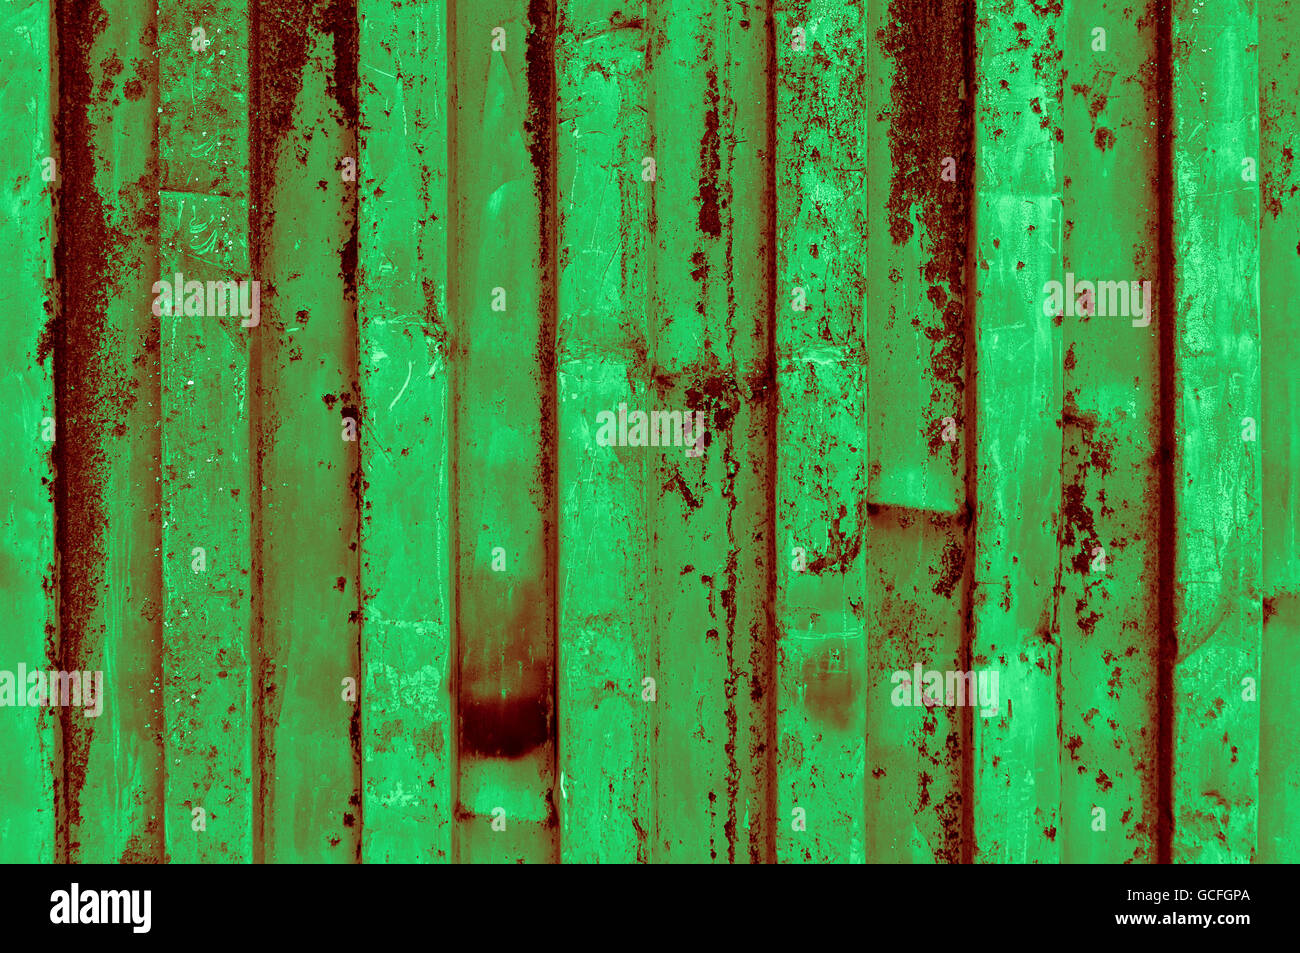 rough and rusty light dark green reddish greenish corrugated iron metal surface close-up Stock Photo